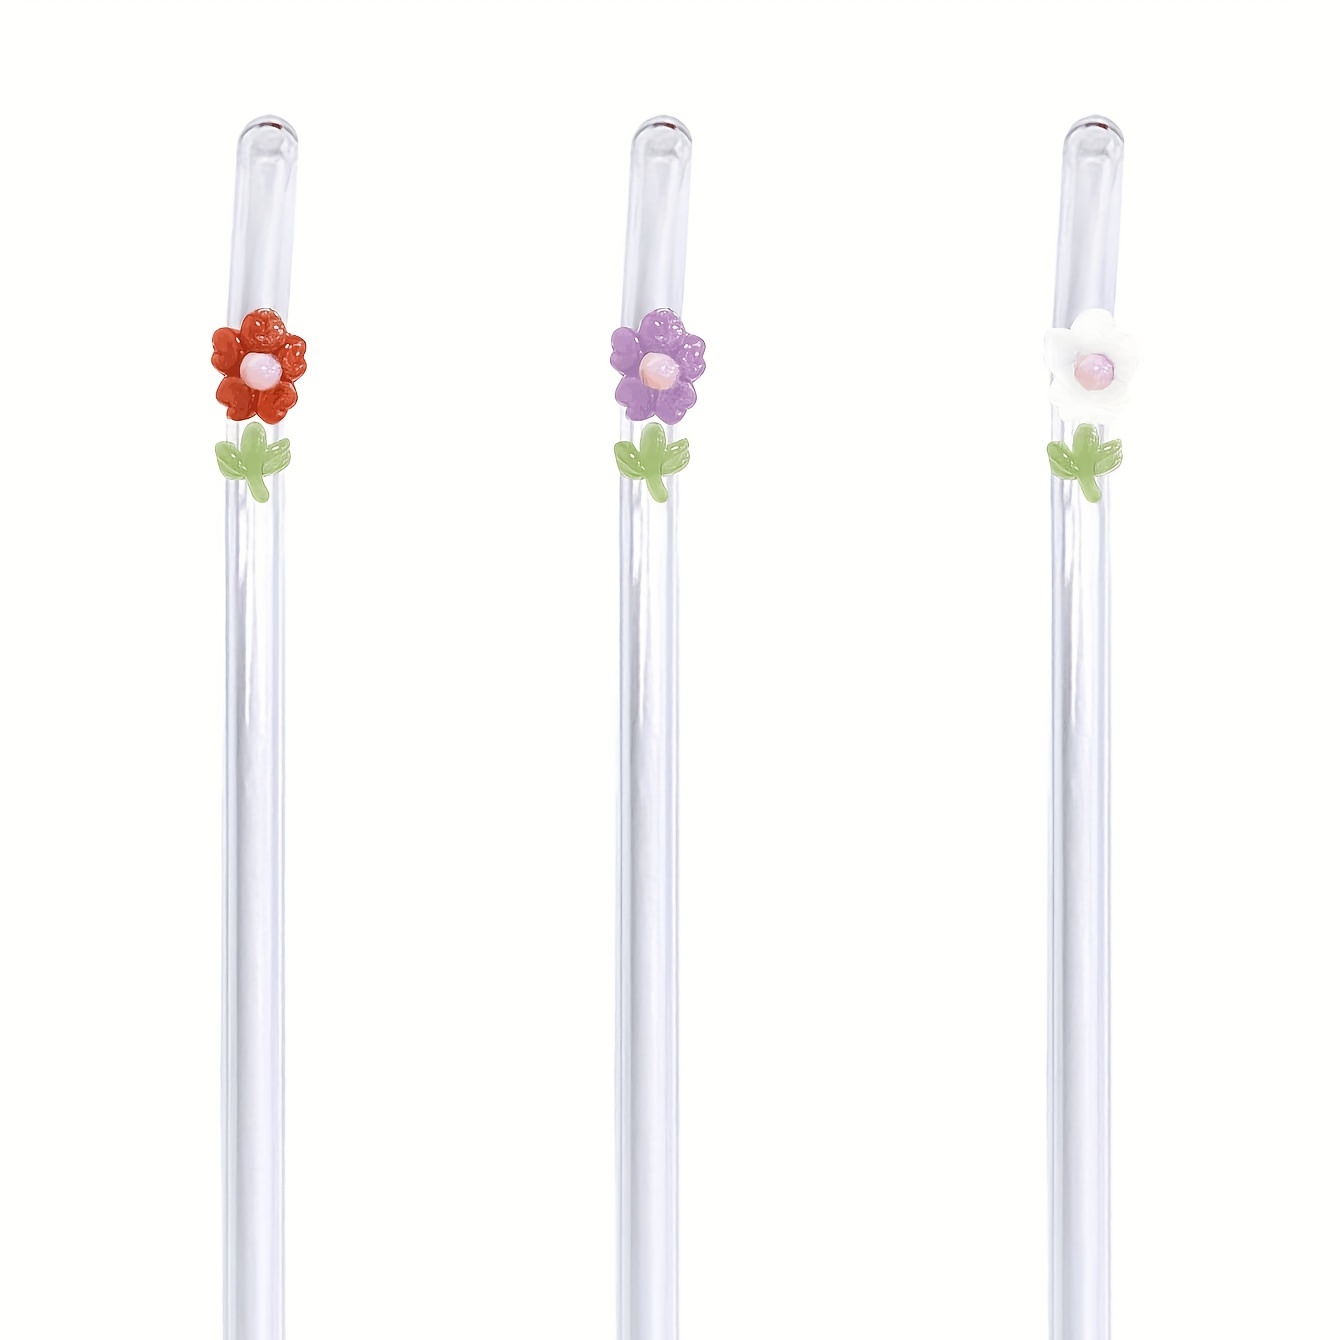 Buy Flower GLASS STRAW Boba Straws Smoothie Straws Thin Straws